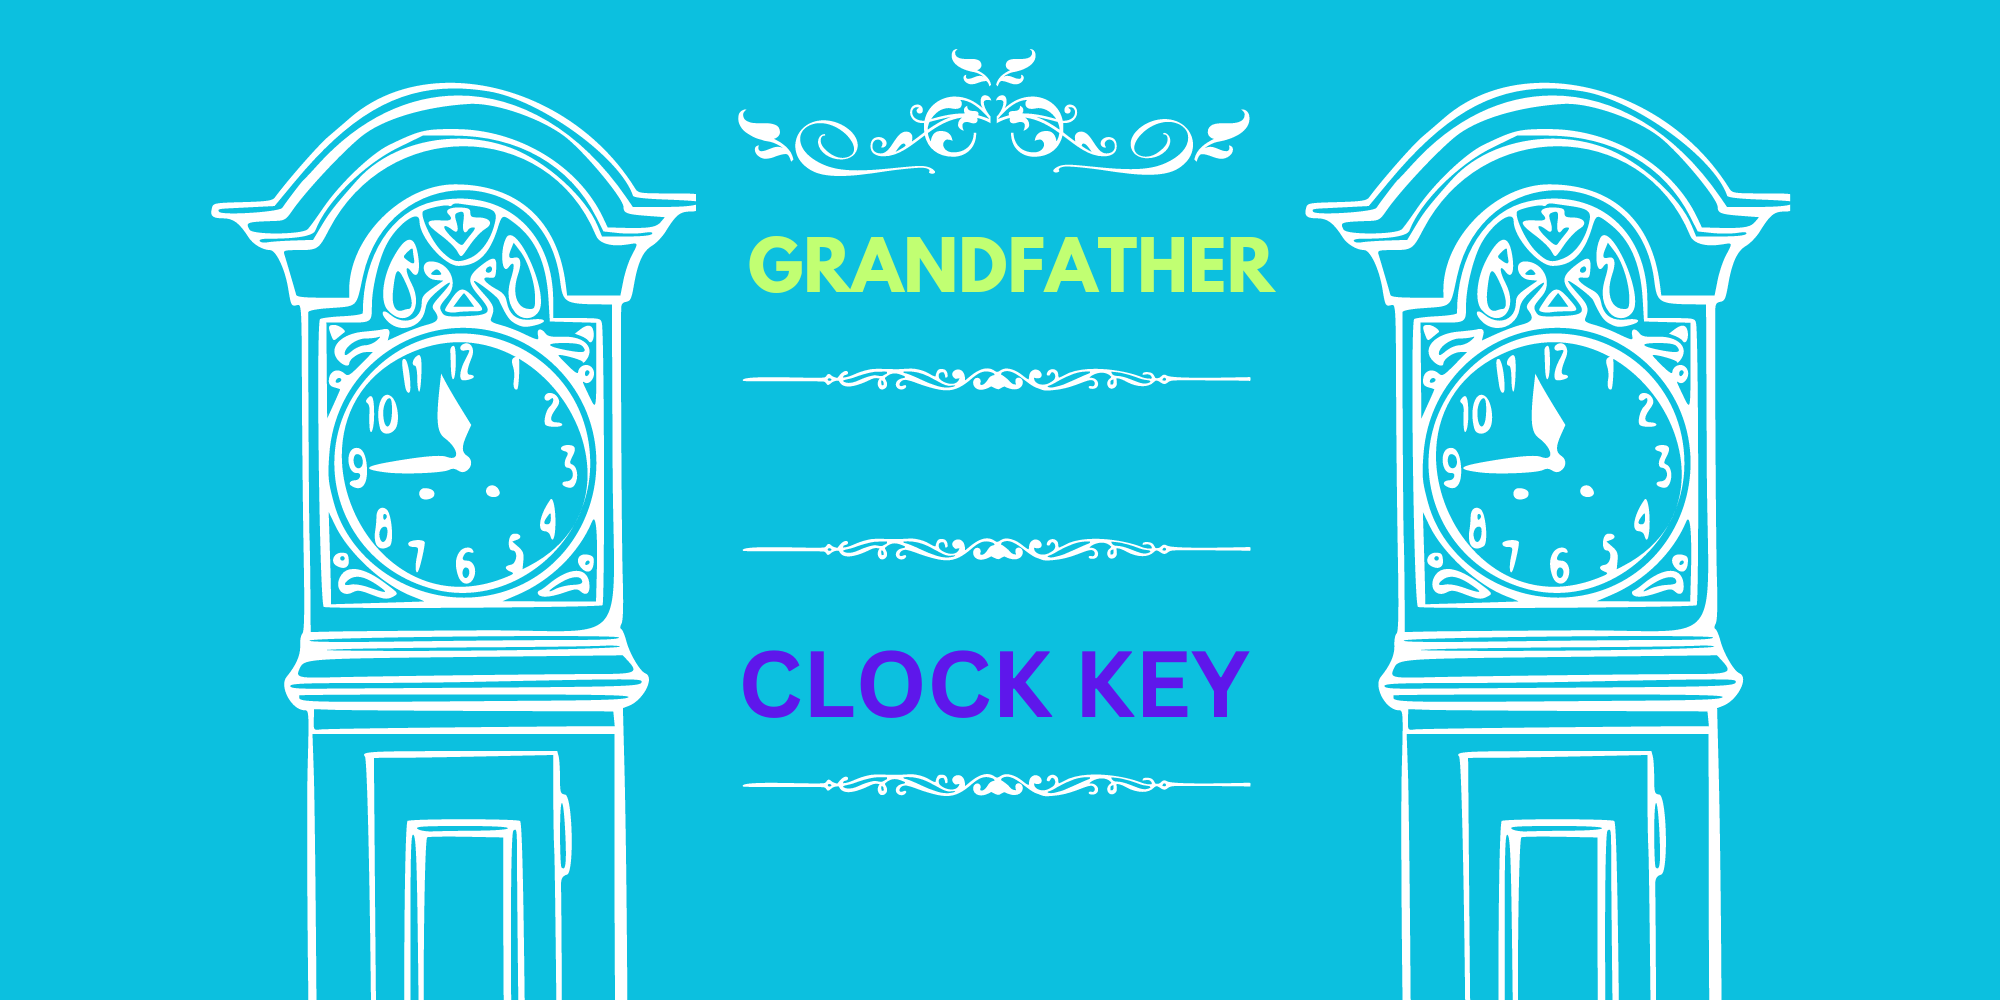 Grandfather Clock Keys